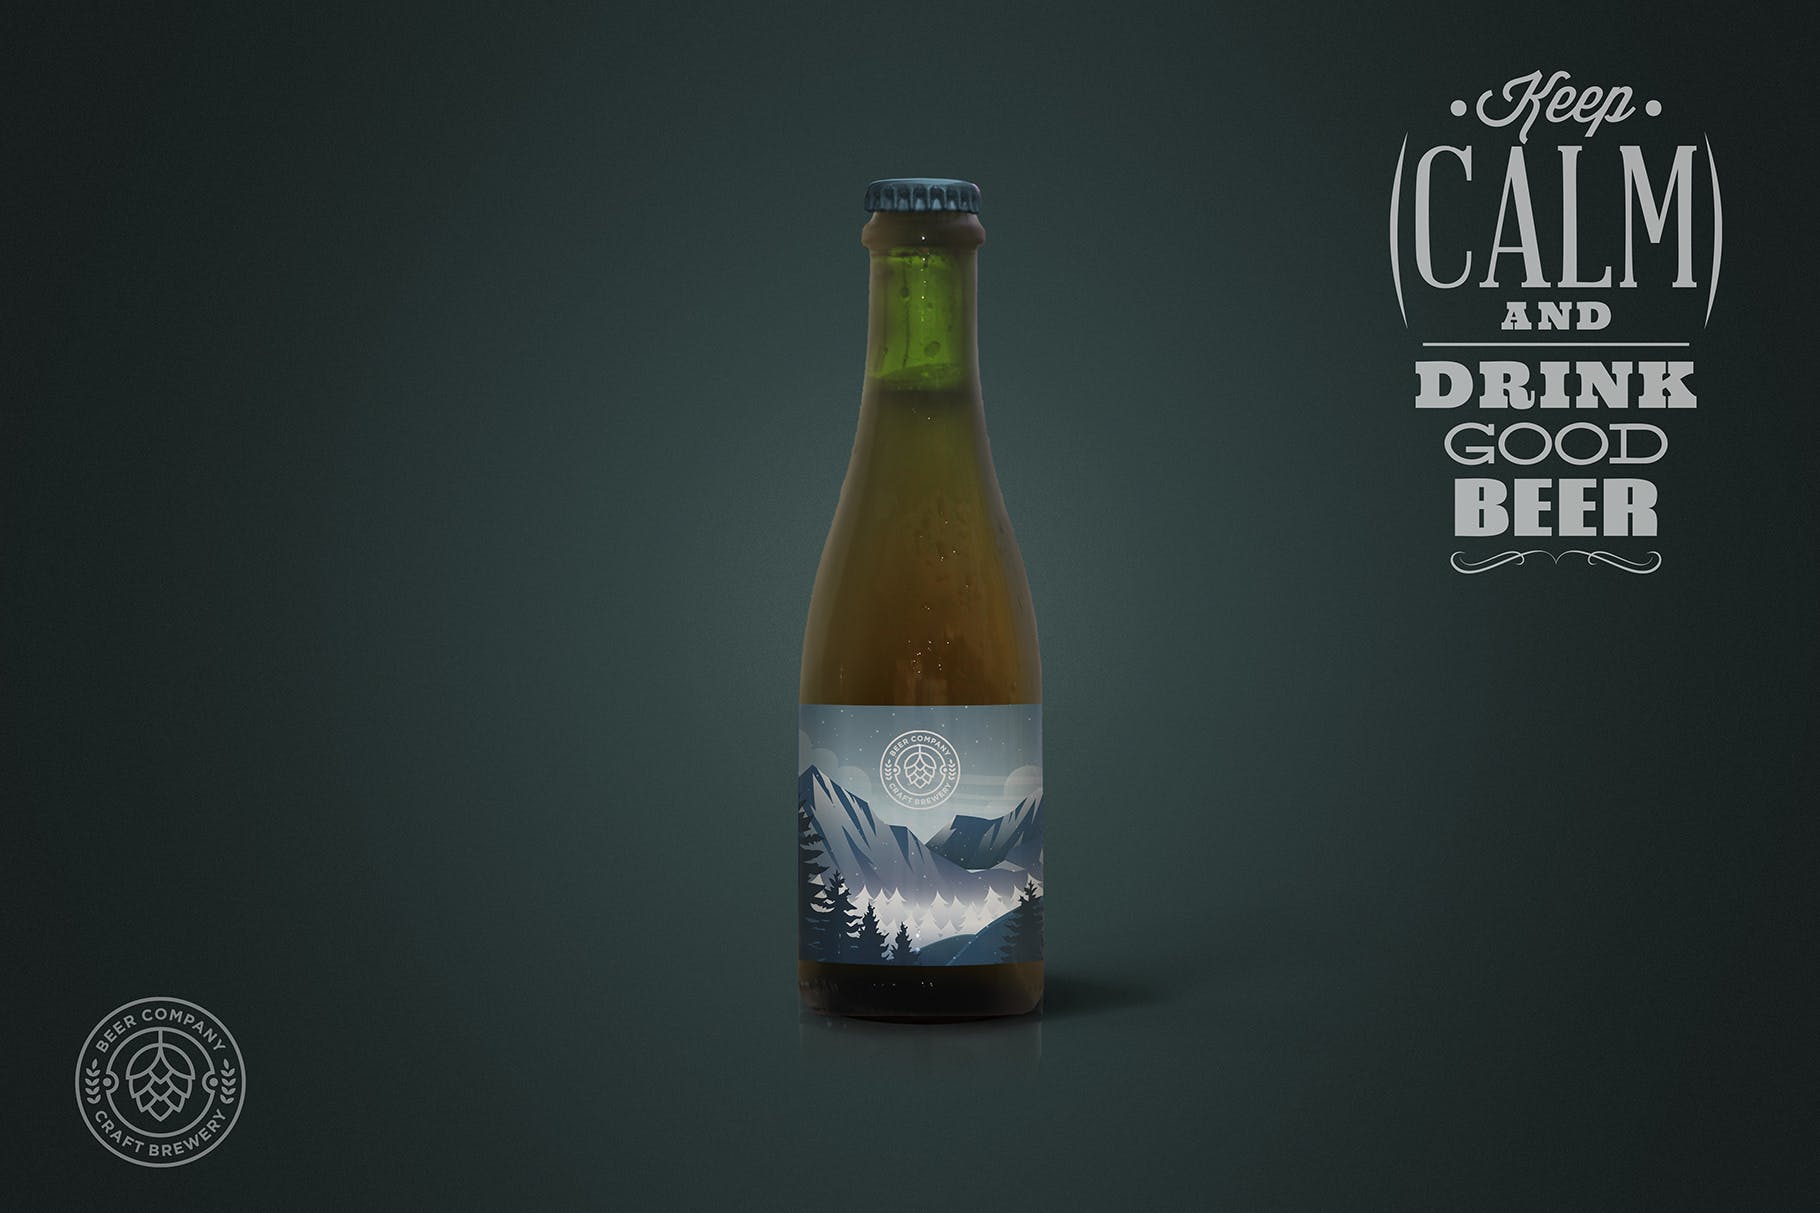 37cl棕褐色啤酒瓶外观设计图16图库精选模板 Clean 37cl Tan Beer Mockup插图(2)